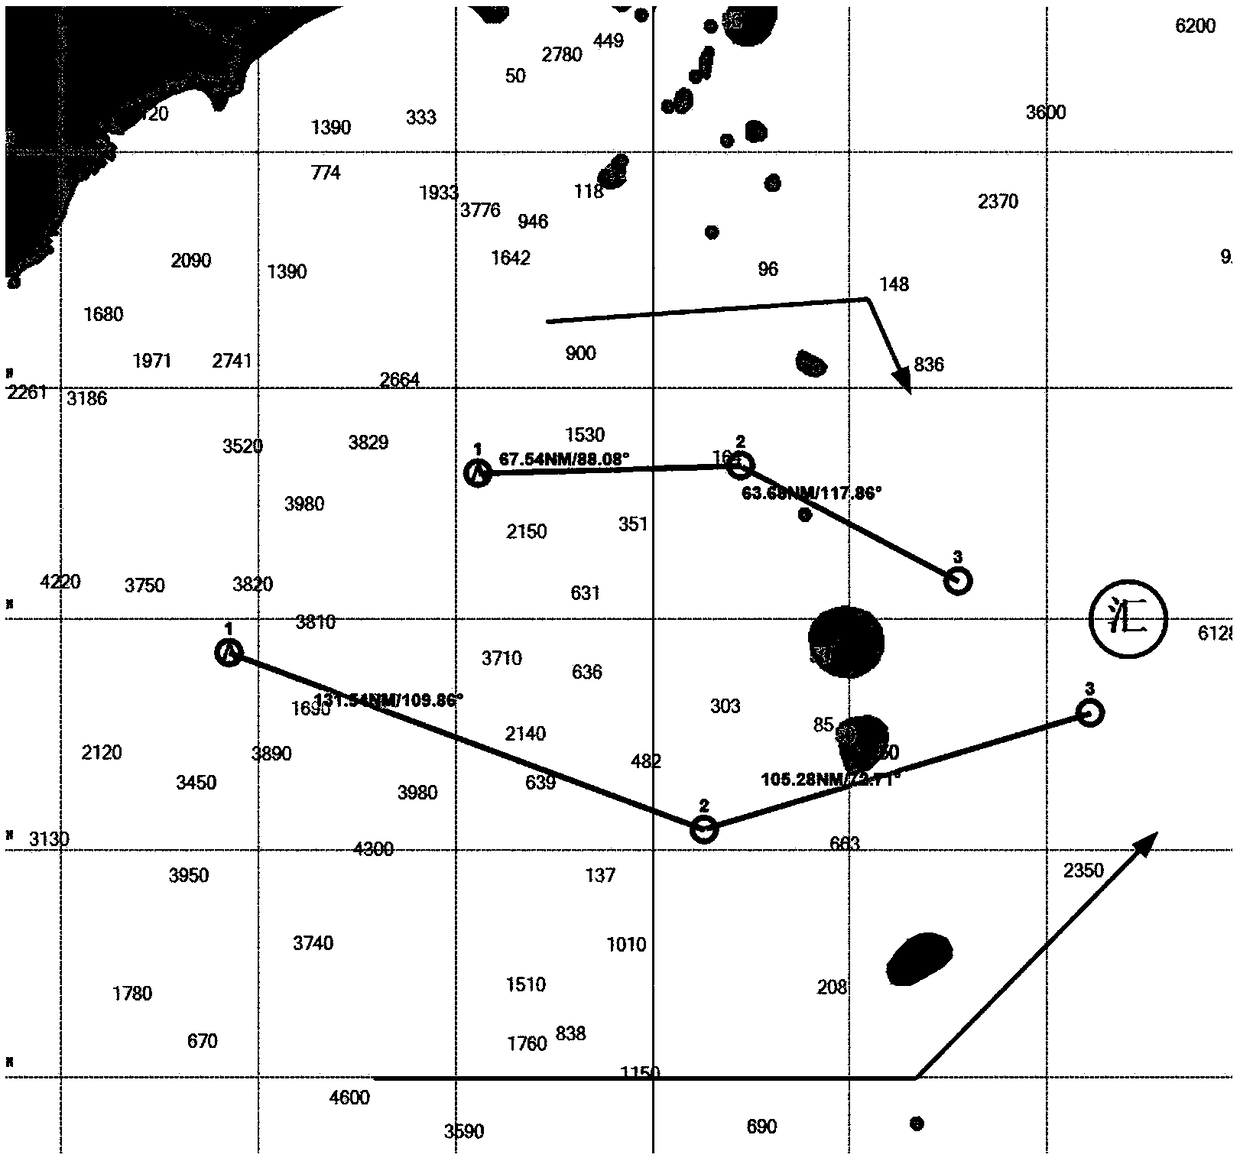 Ship target situation simulation method based on electronic chart